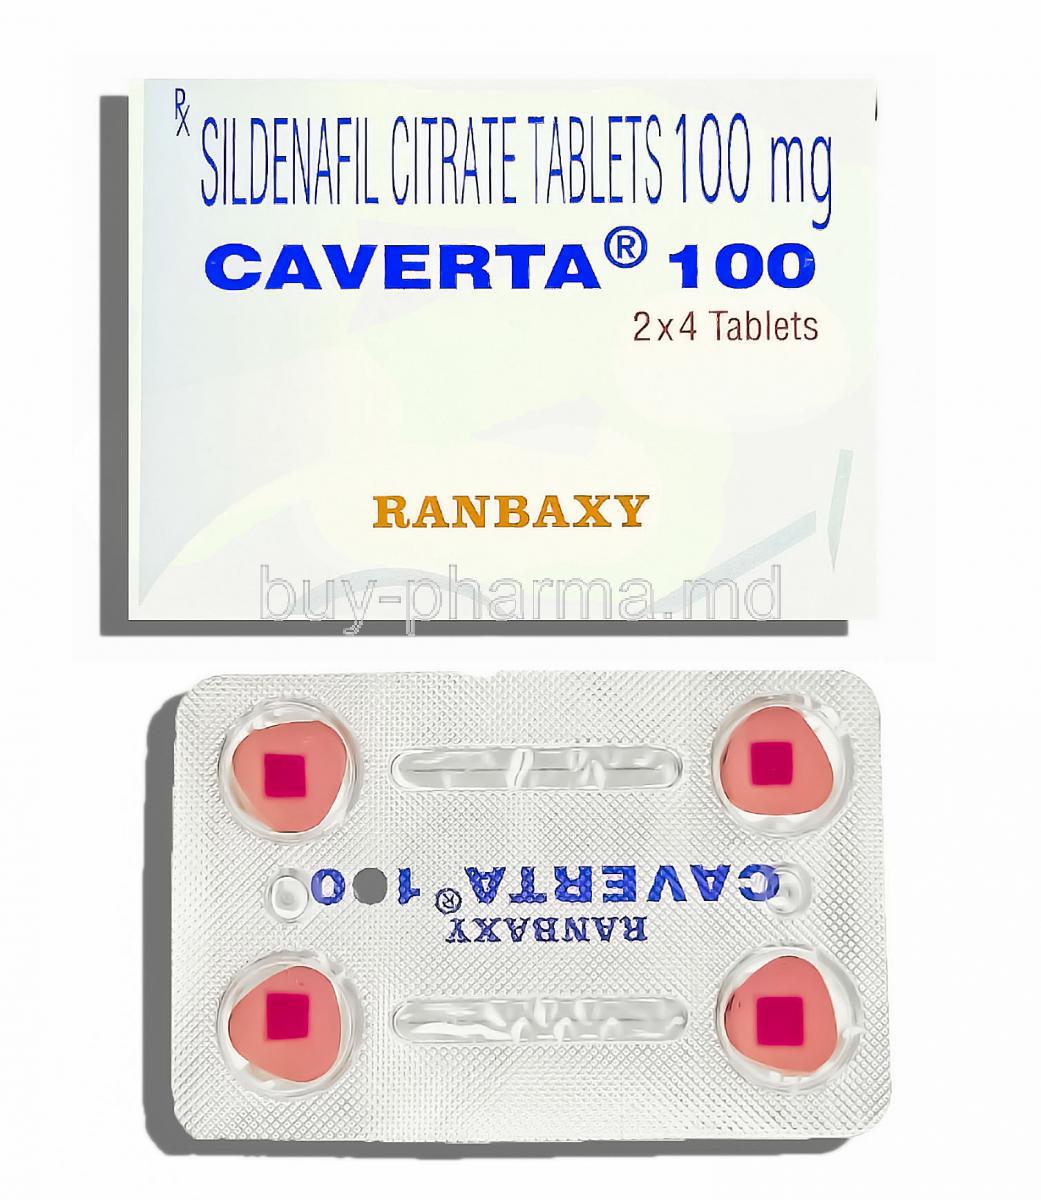 Ivermectin as antiviral